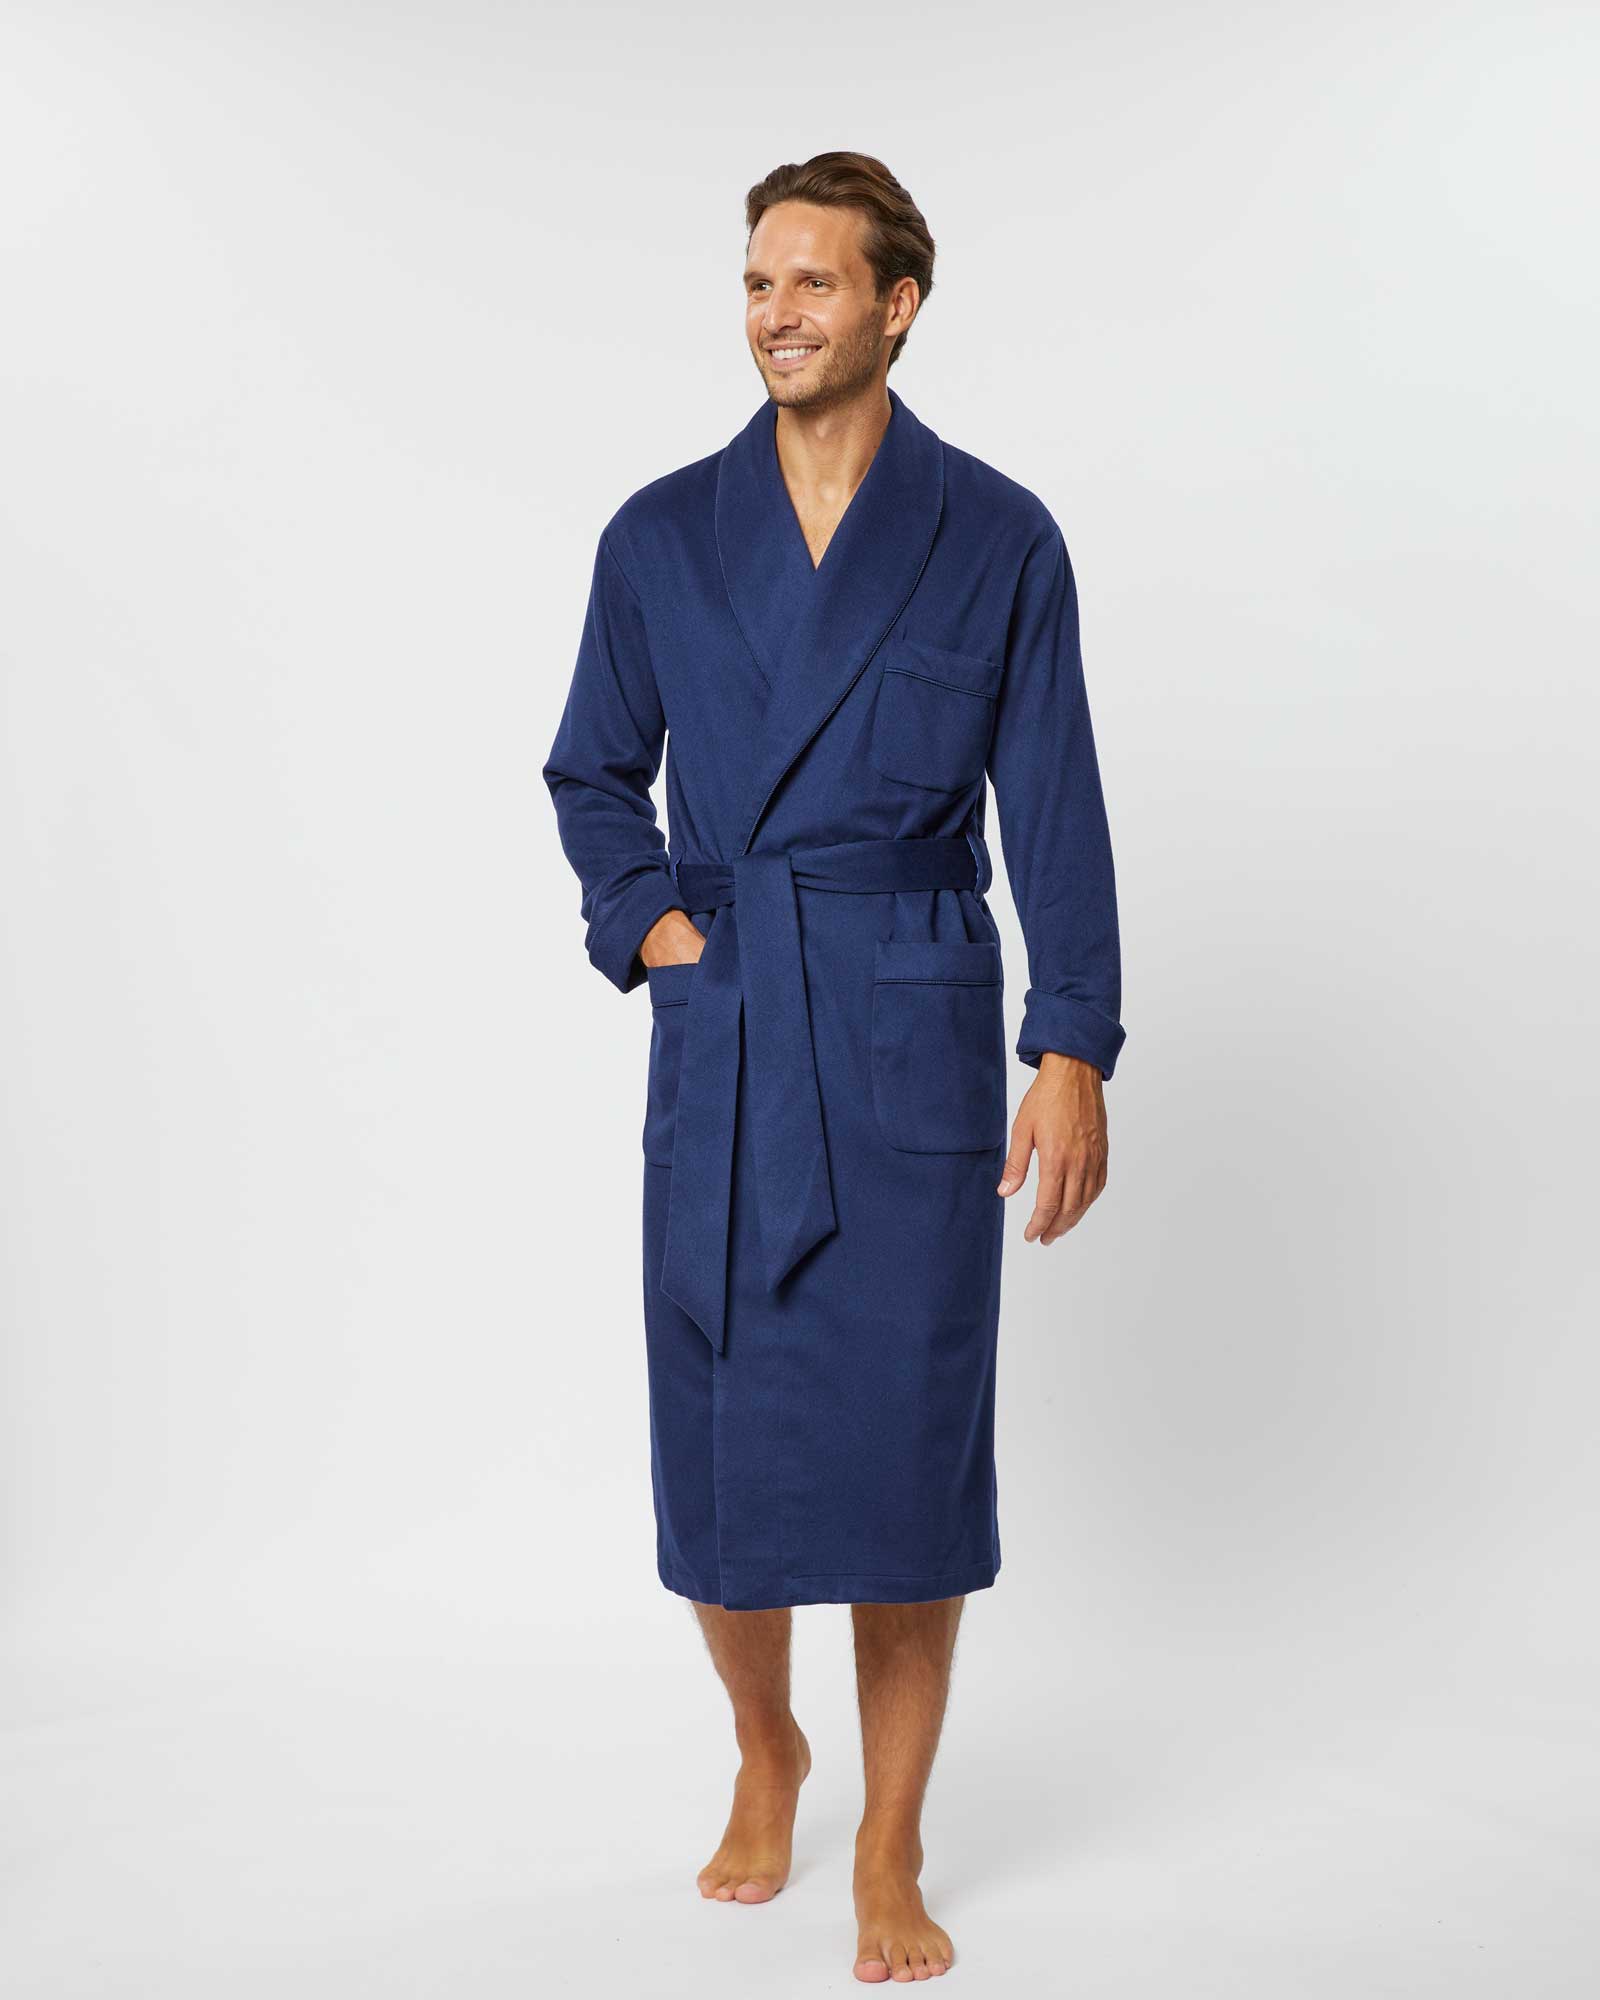 Men's Luxury Robe And Pajamas In 2XL, 3XL, 4XL And 5XL | Baturina Homewear  | Mens silk pajamas, Mens dressing gown, Men's robes